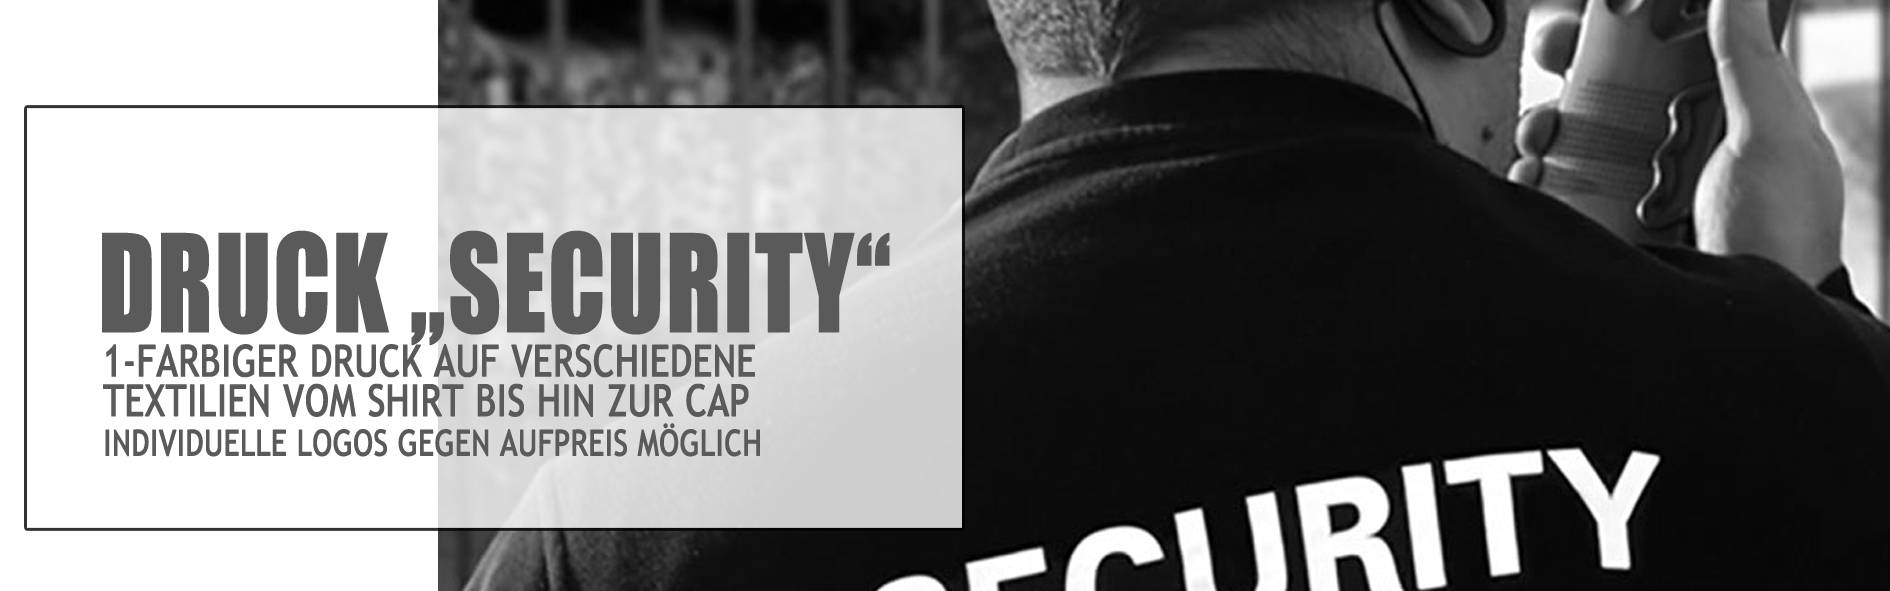 kategorie_security